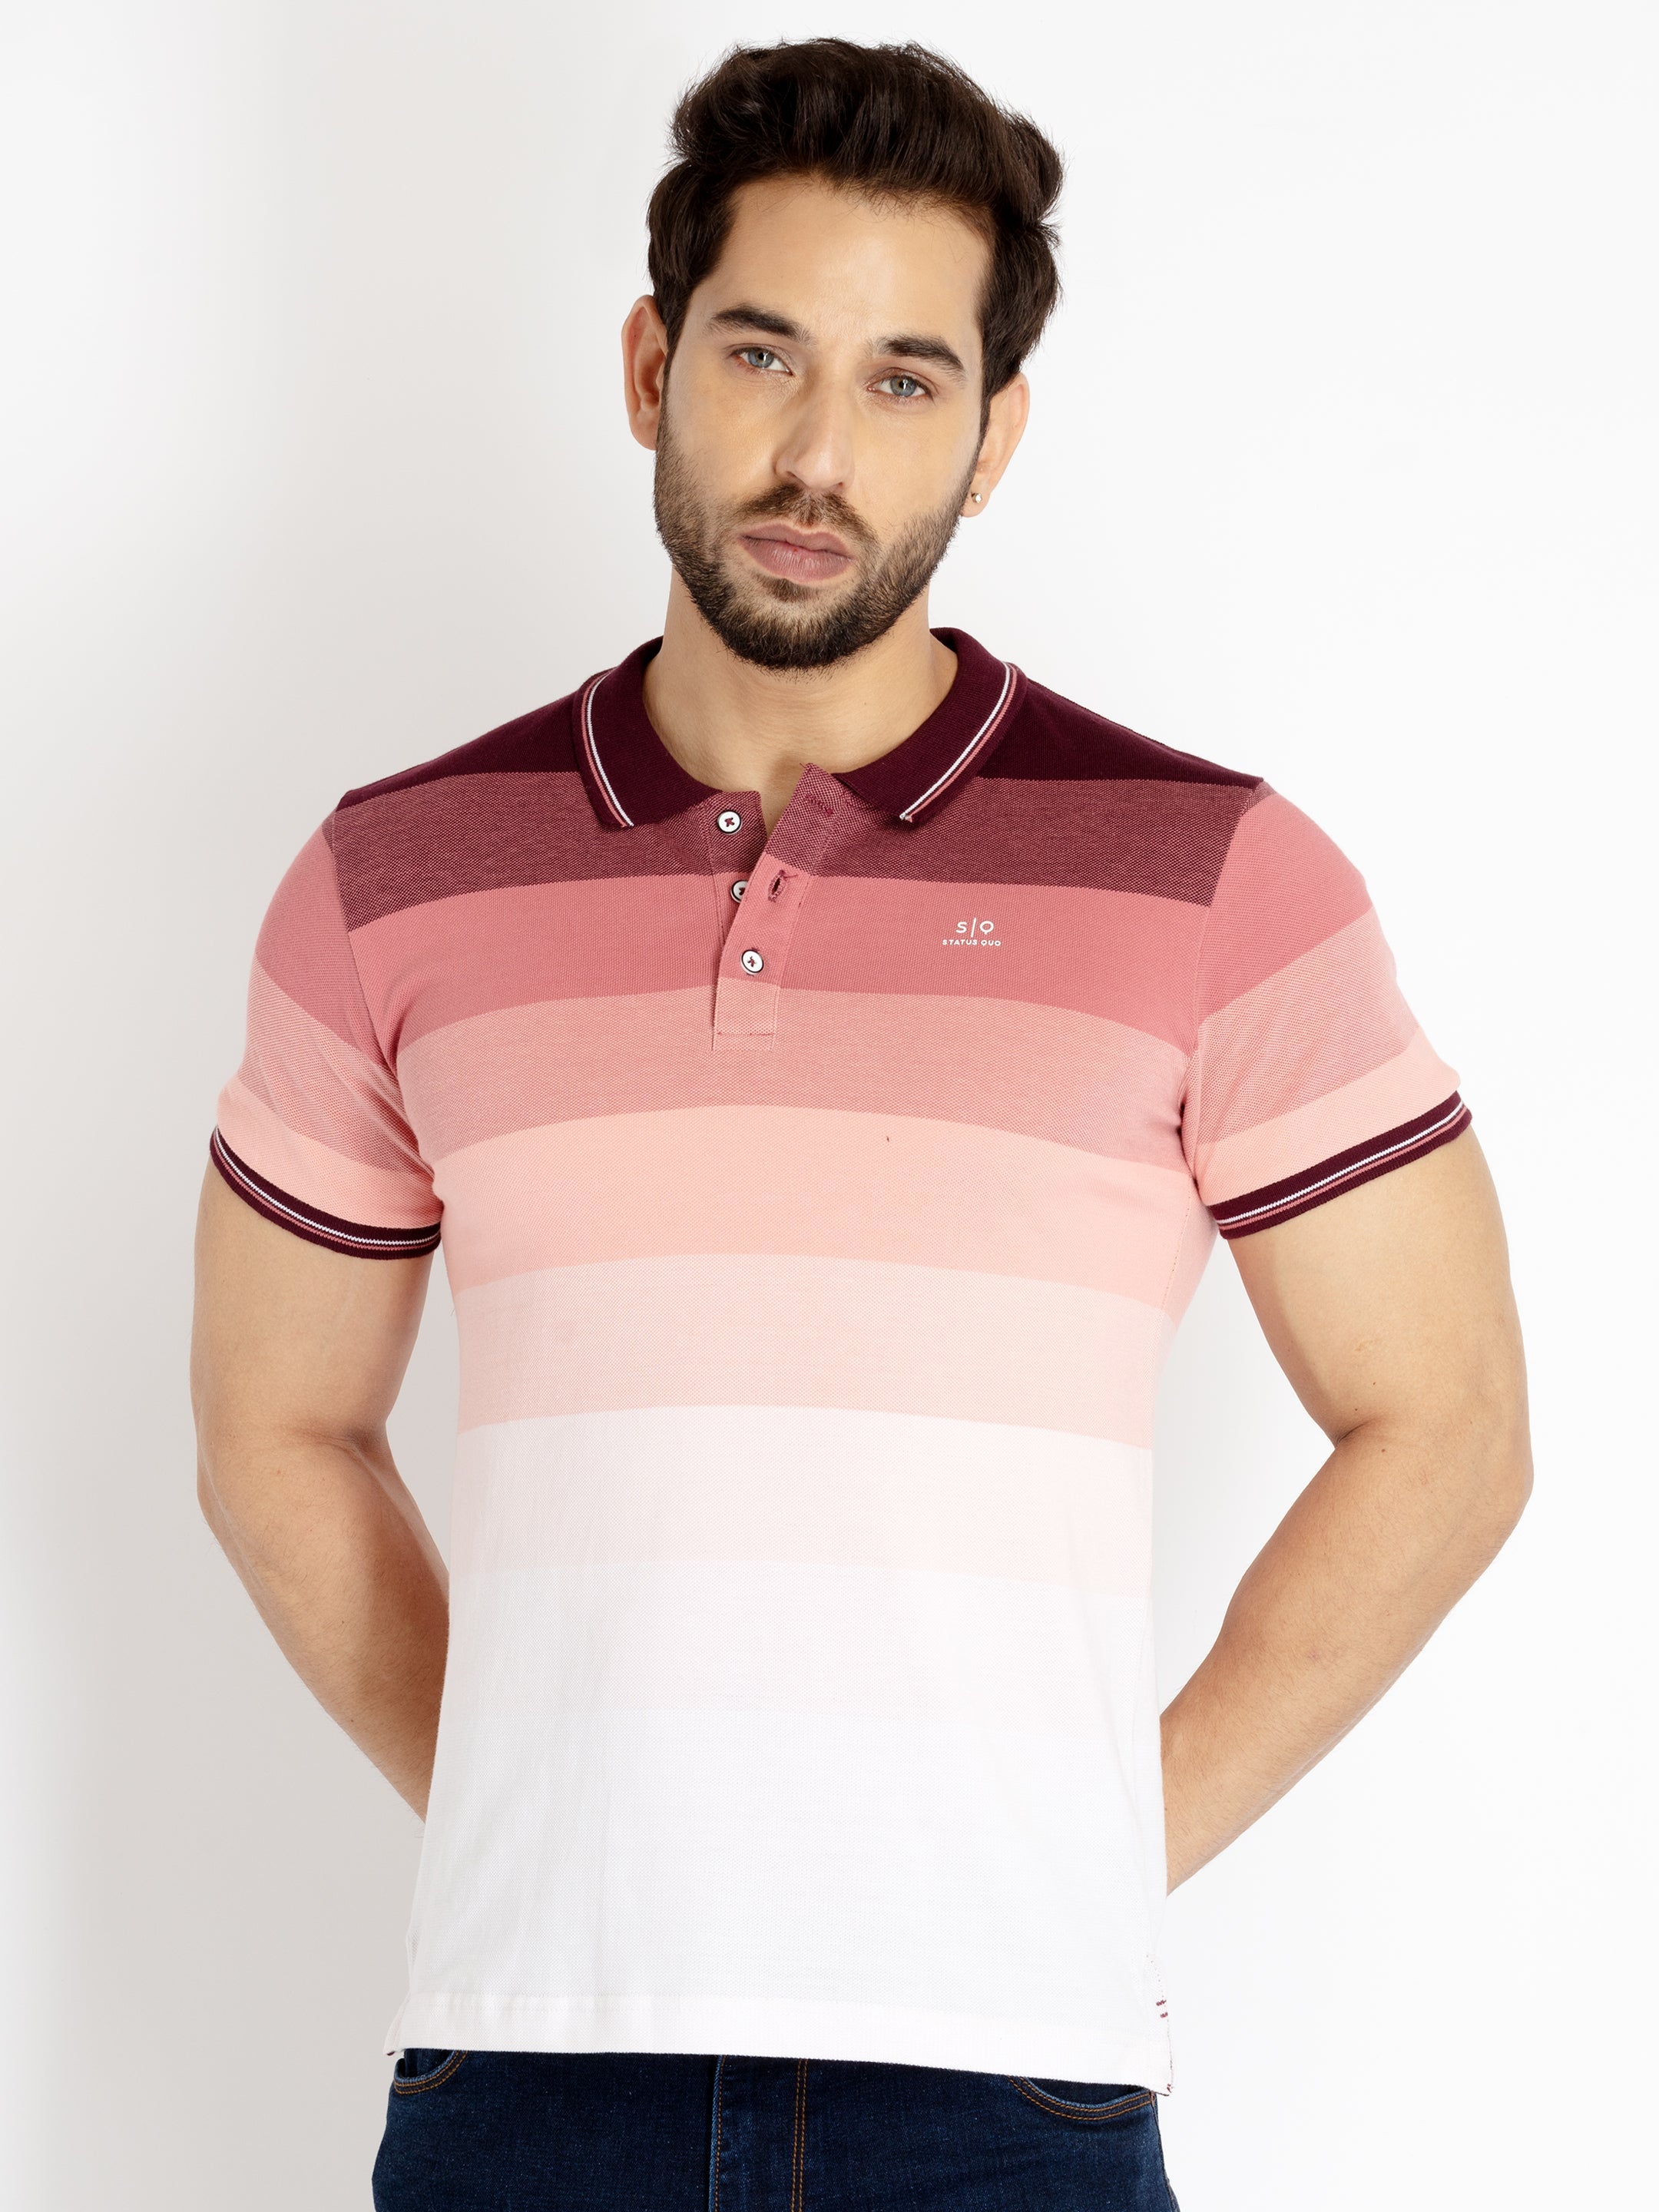 Striped polo t shirt